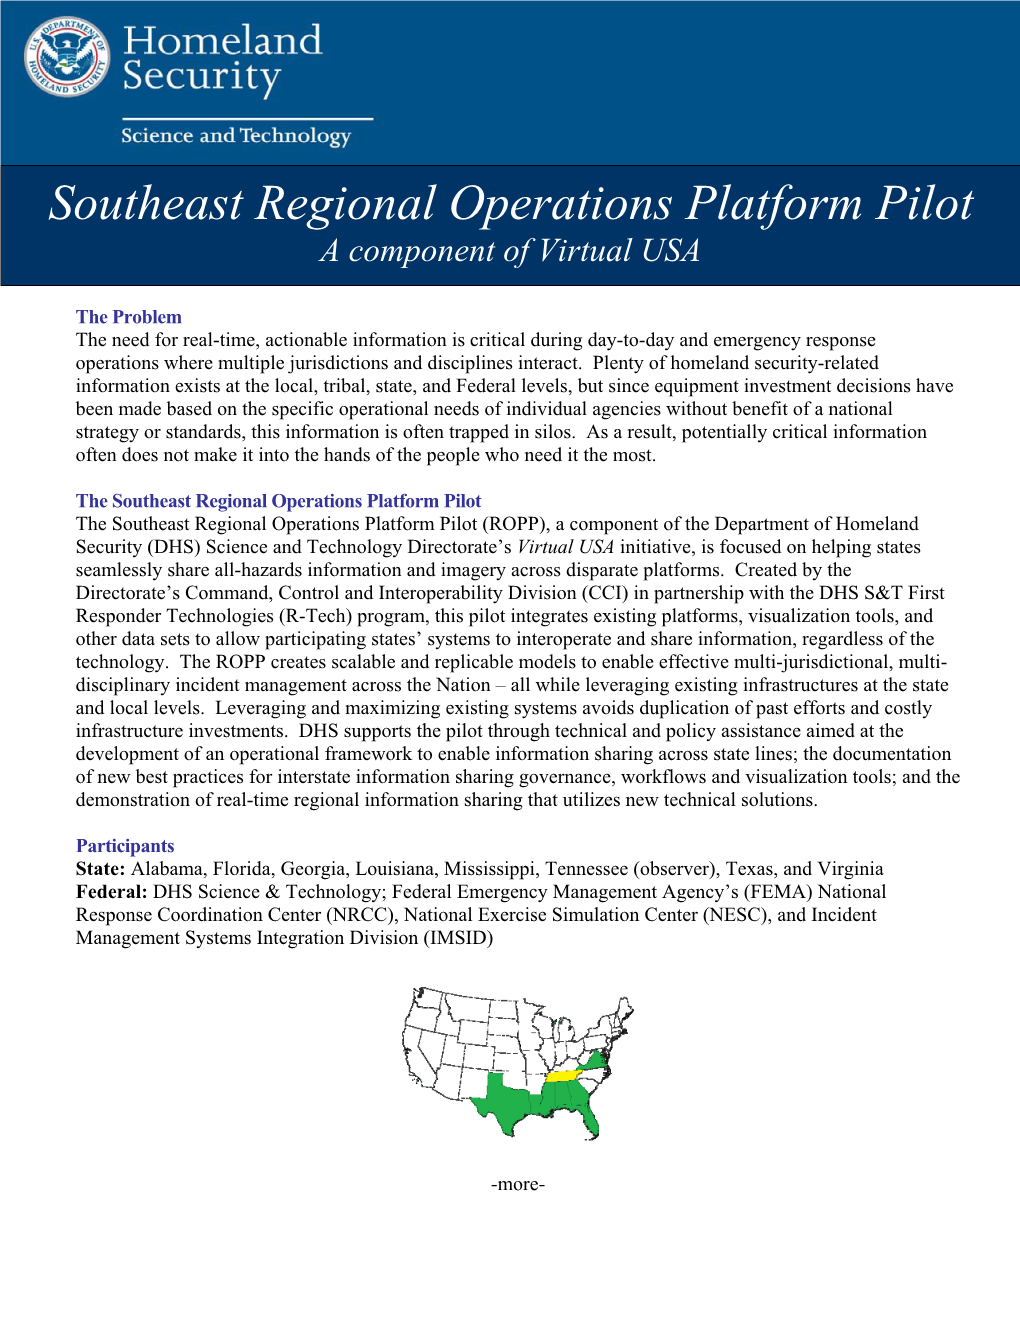 Southeast Regional Operations Platform Pilot a Component of Virtual USA